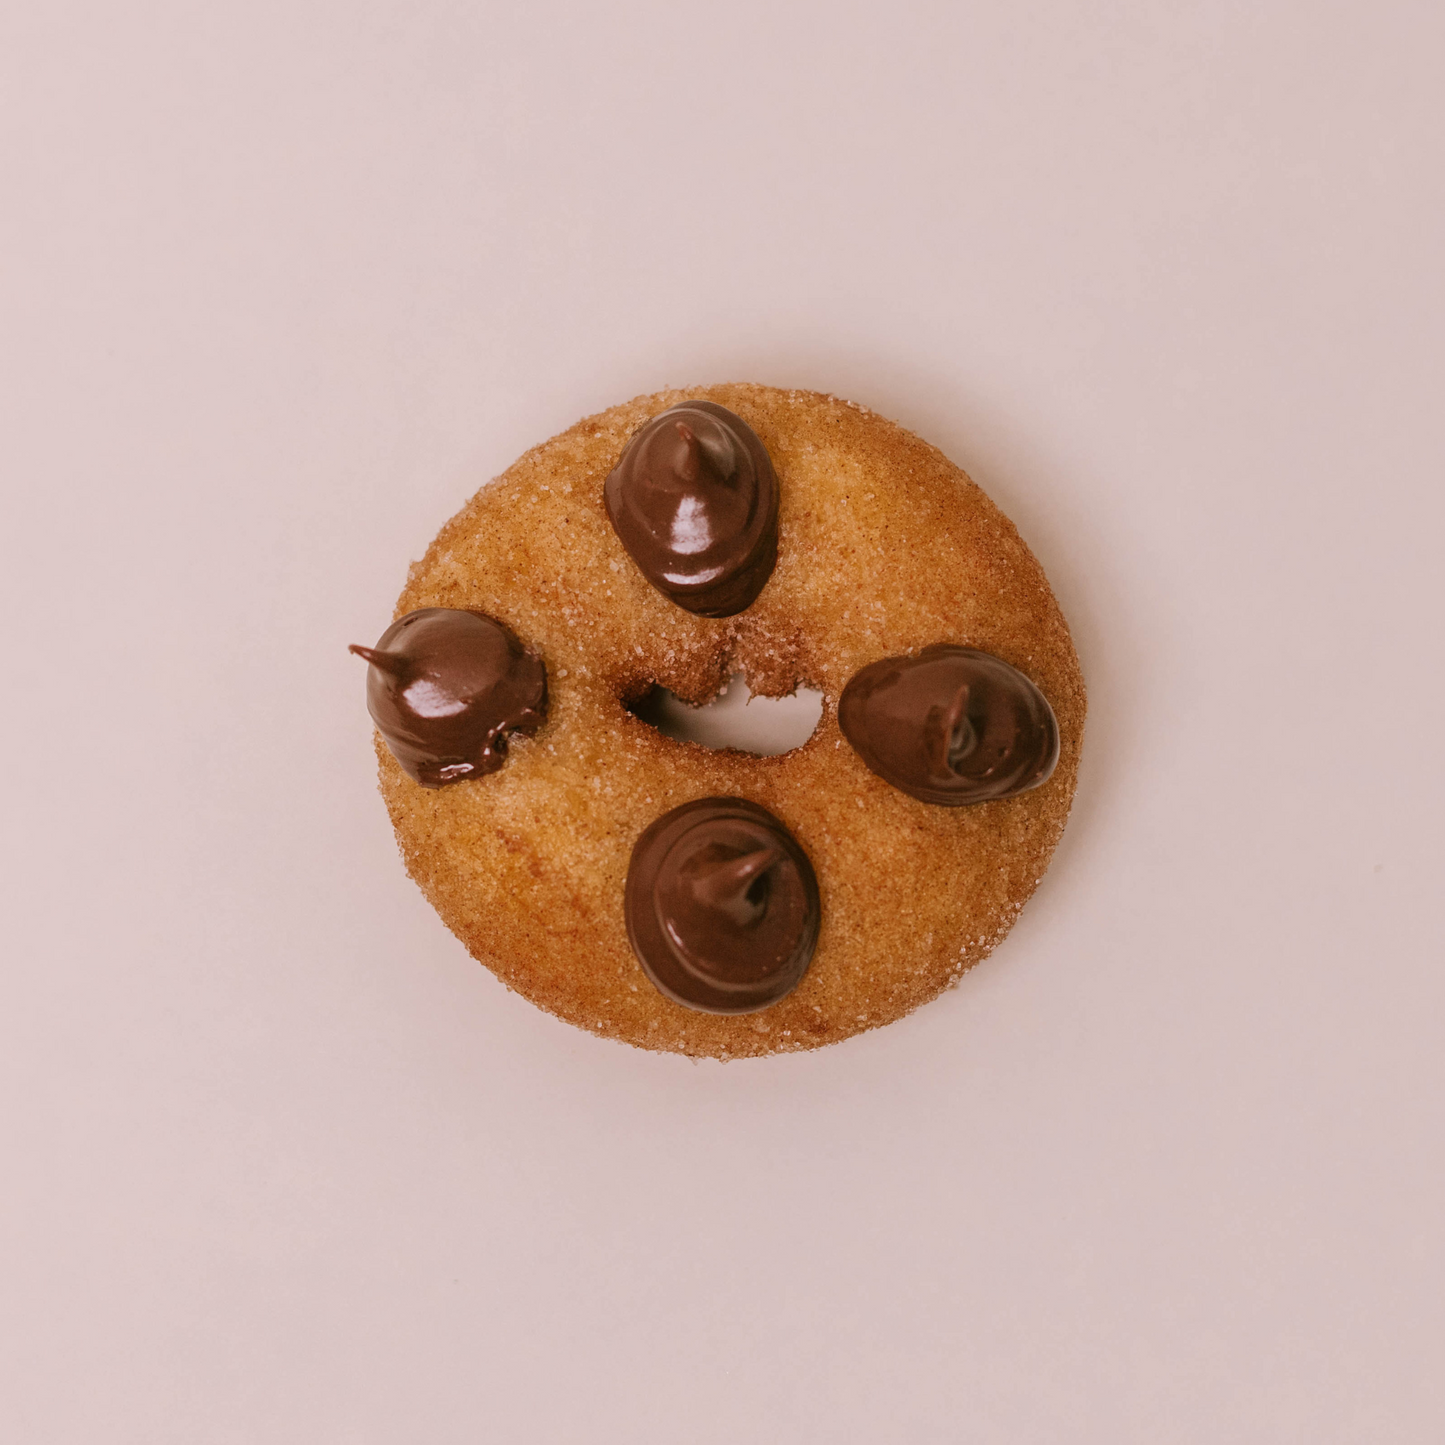 Gluten Free Nutella Donuts